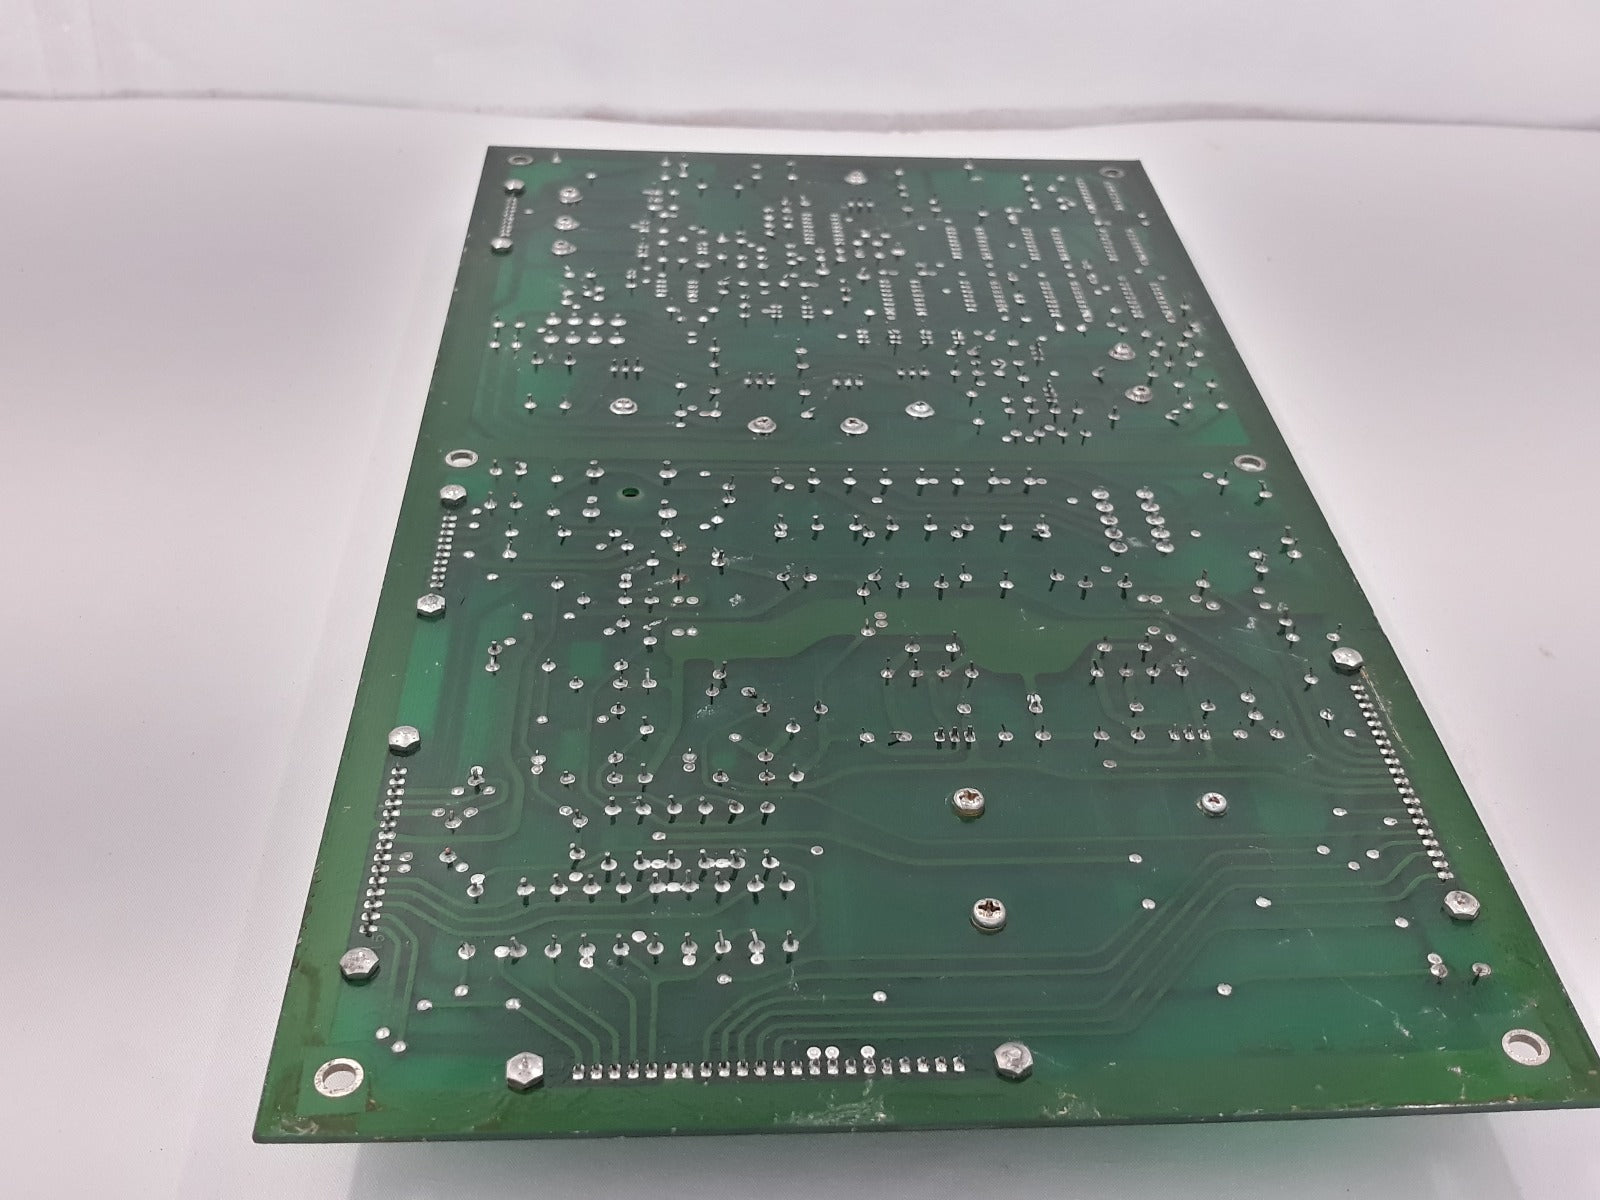 Jrc Cba 96 Pc210 Pcb Circuit Board H-6Pcrd00502B